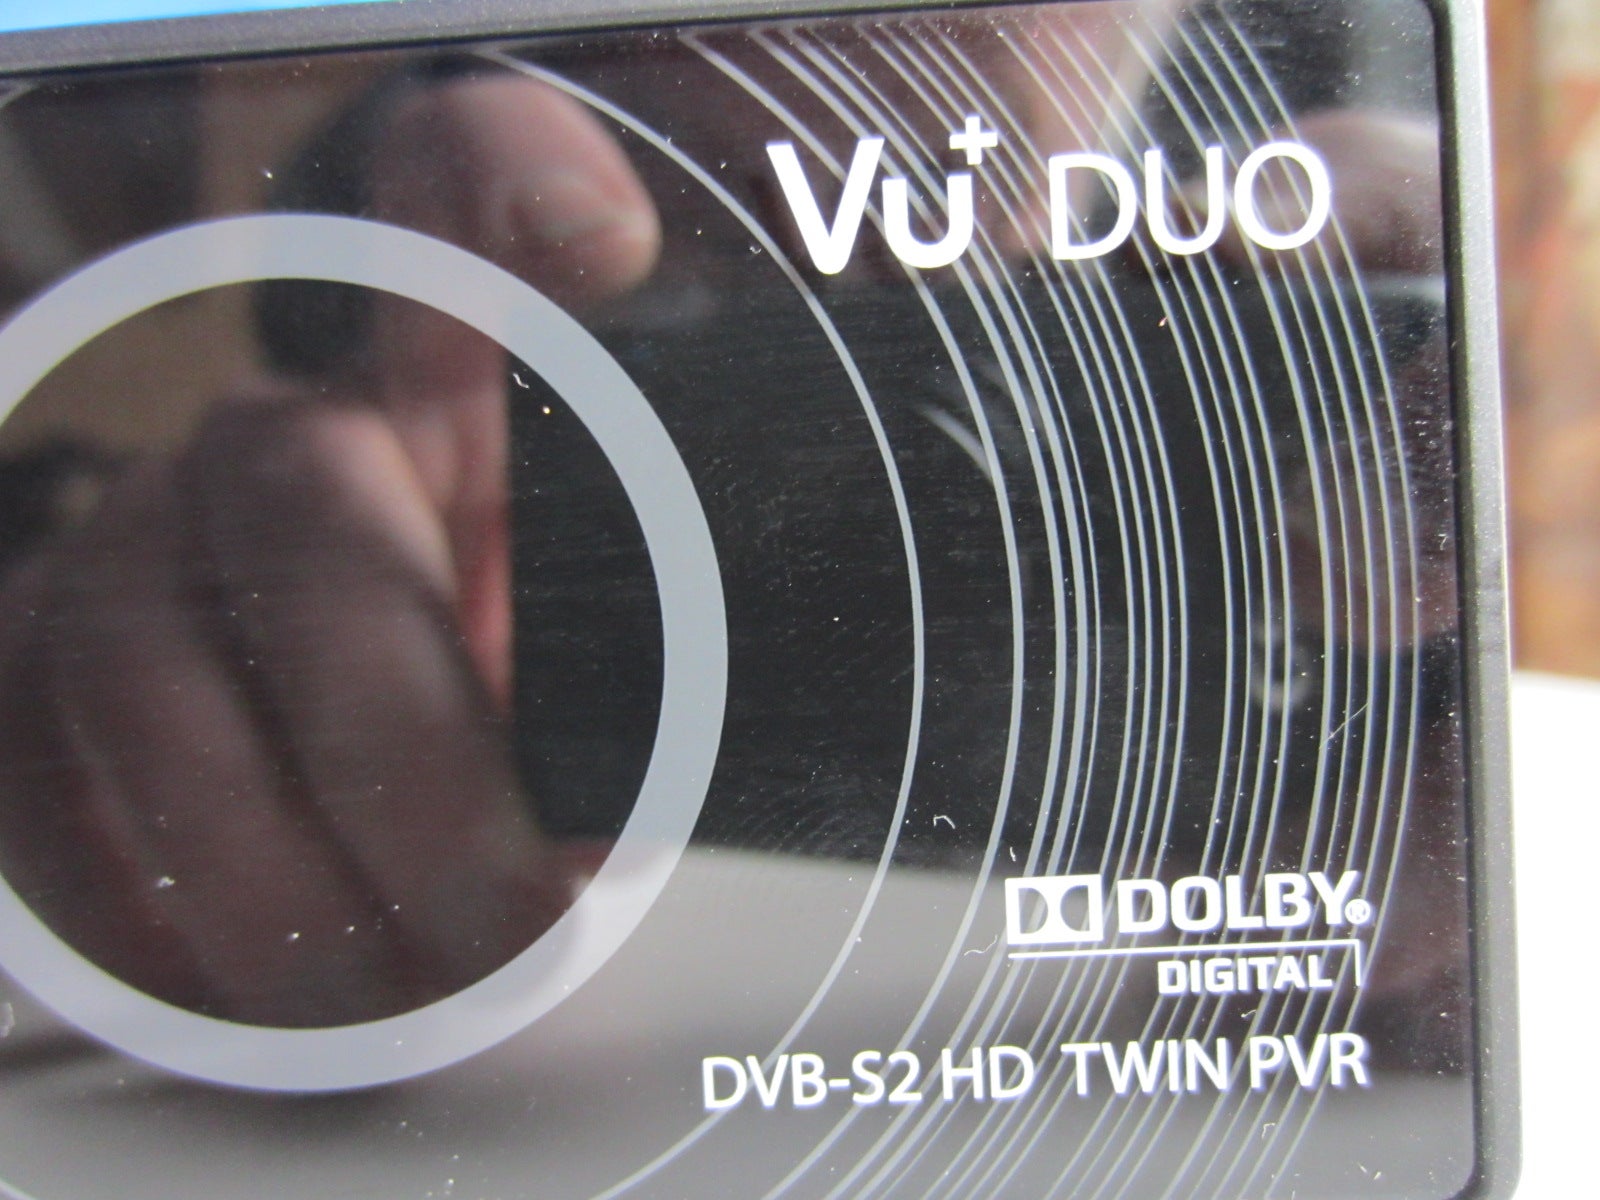 VU+ DUO DVB-S2 Twin Tuner HD PVR DVB-S2 satellit